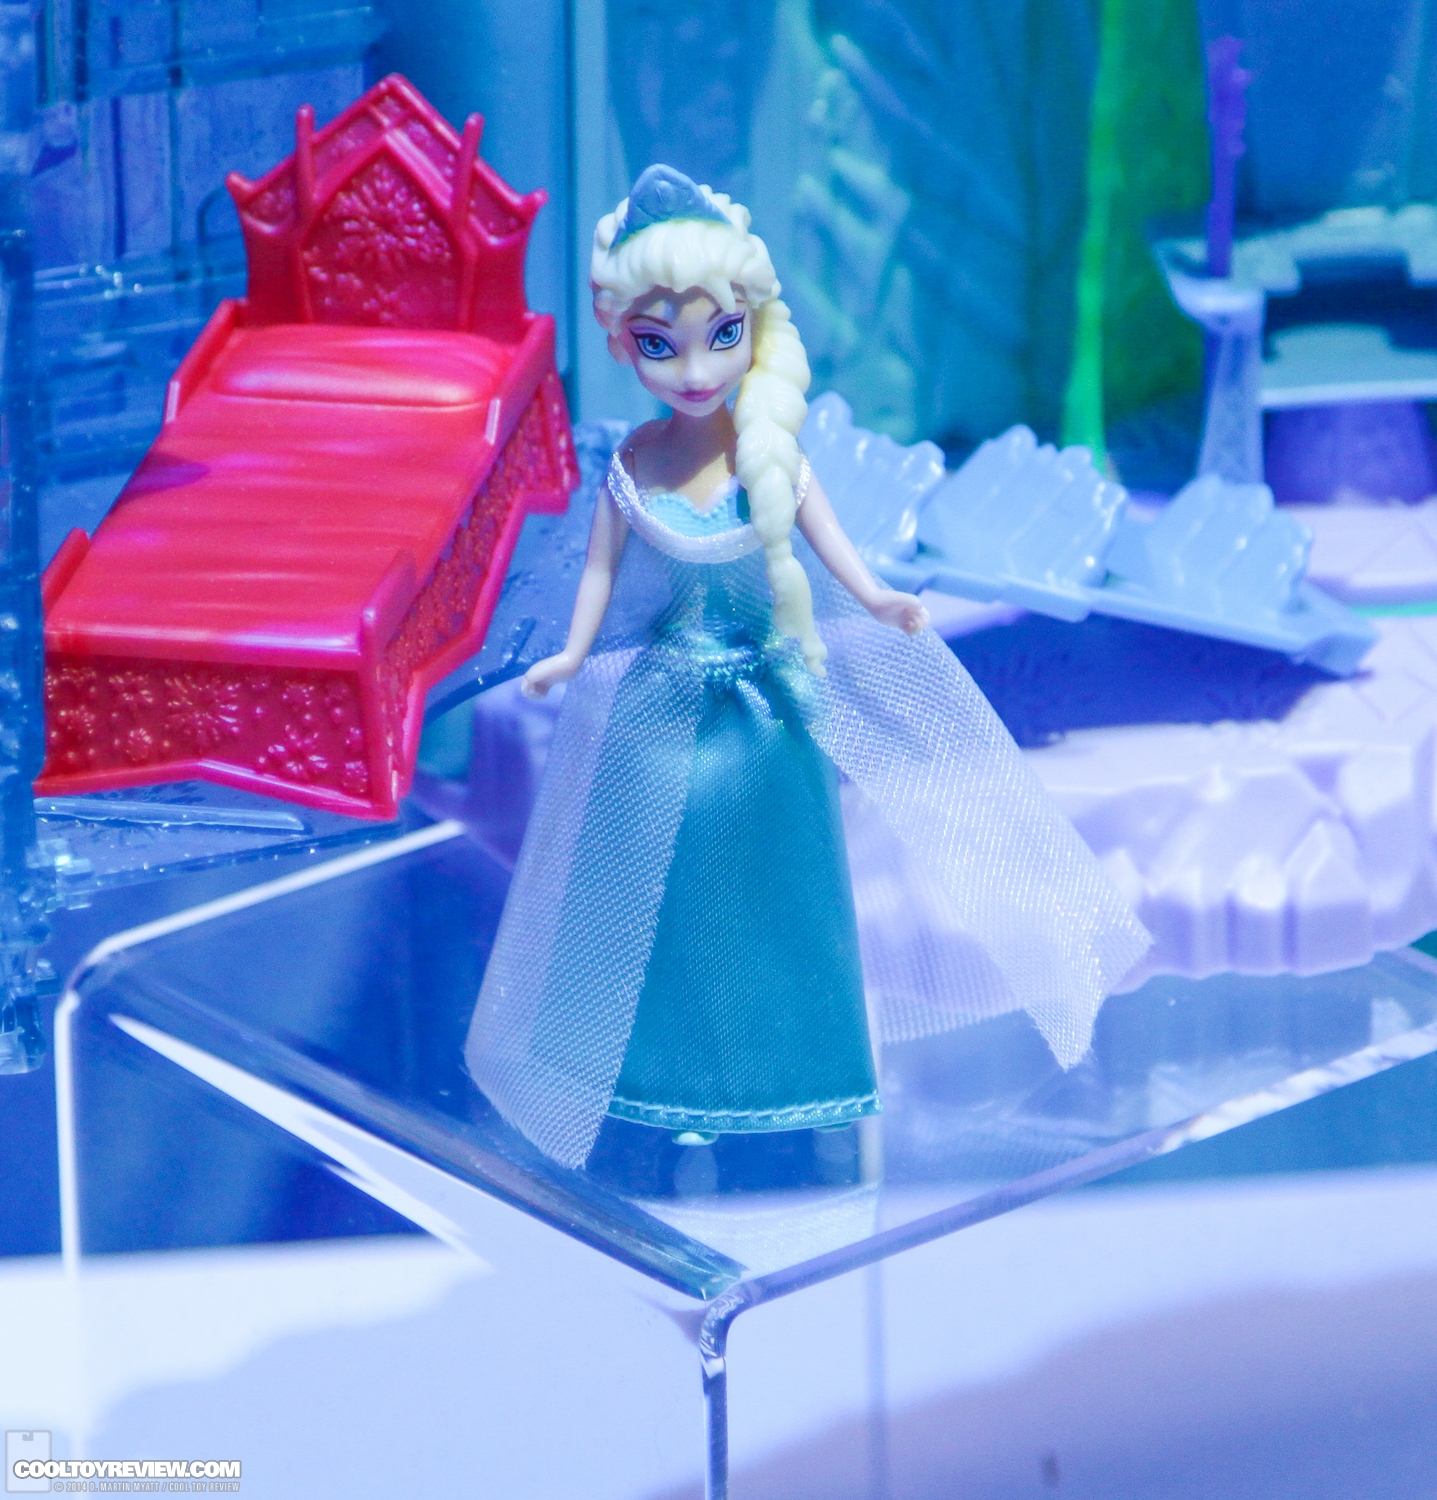 Toy-Fair-2014-Mattel-Showroom-279.jpg